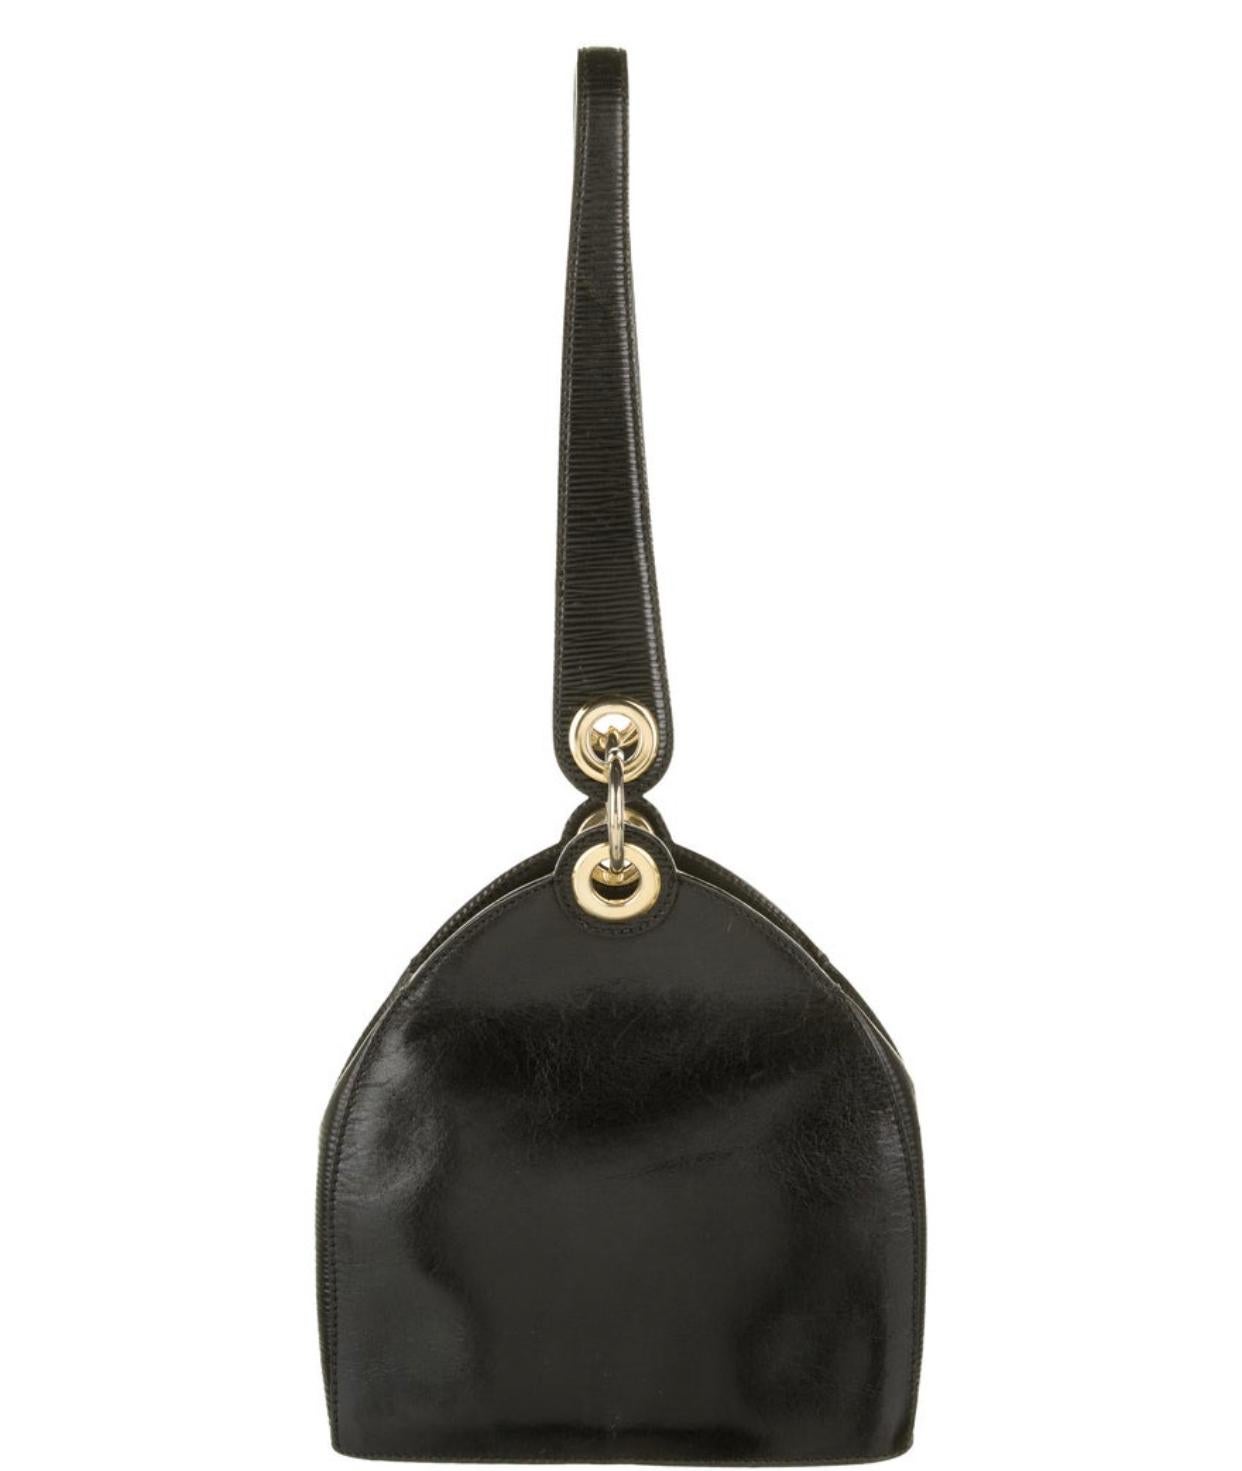 Fendi Janus black leather bag with gold tone hardware. Single interior pocket. 

7.5